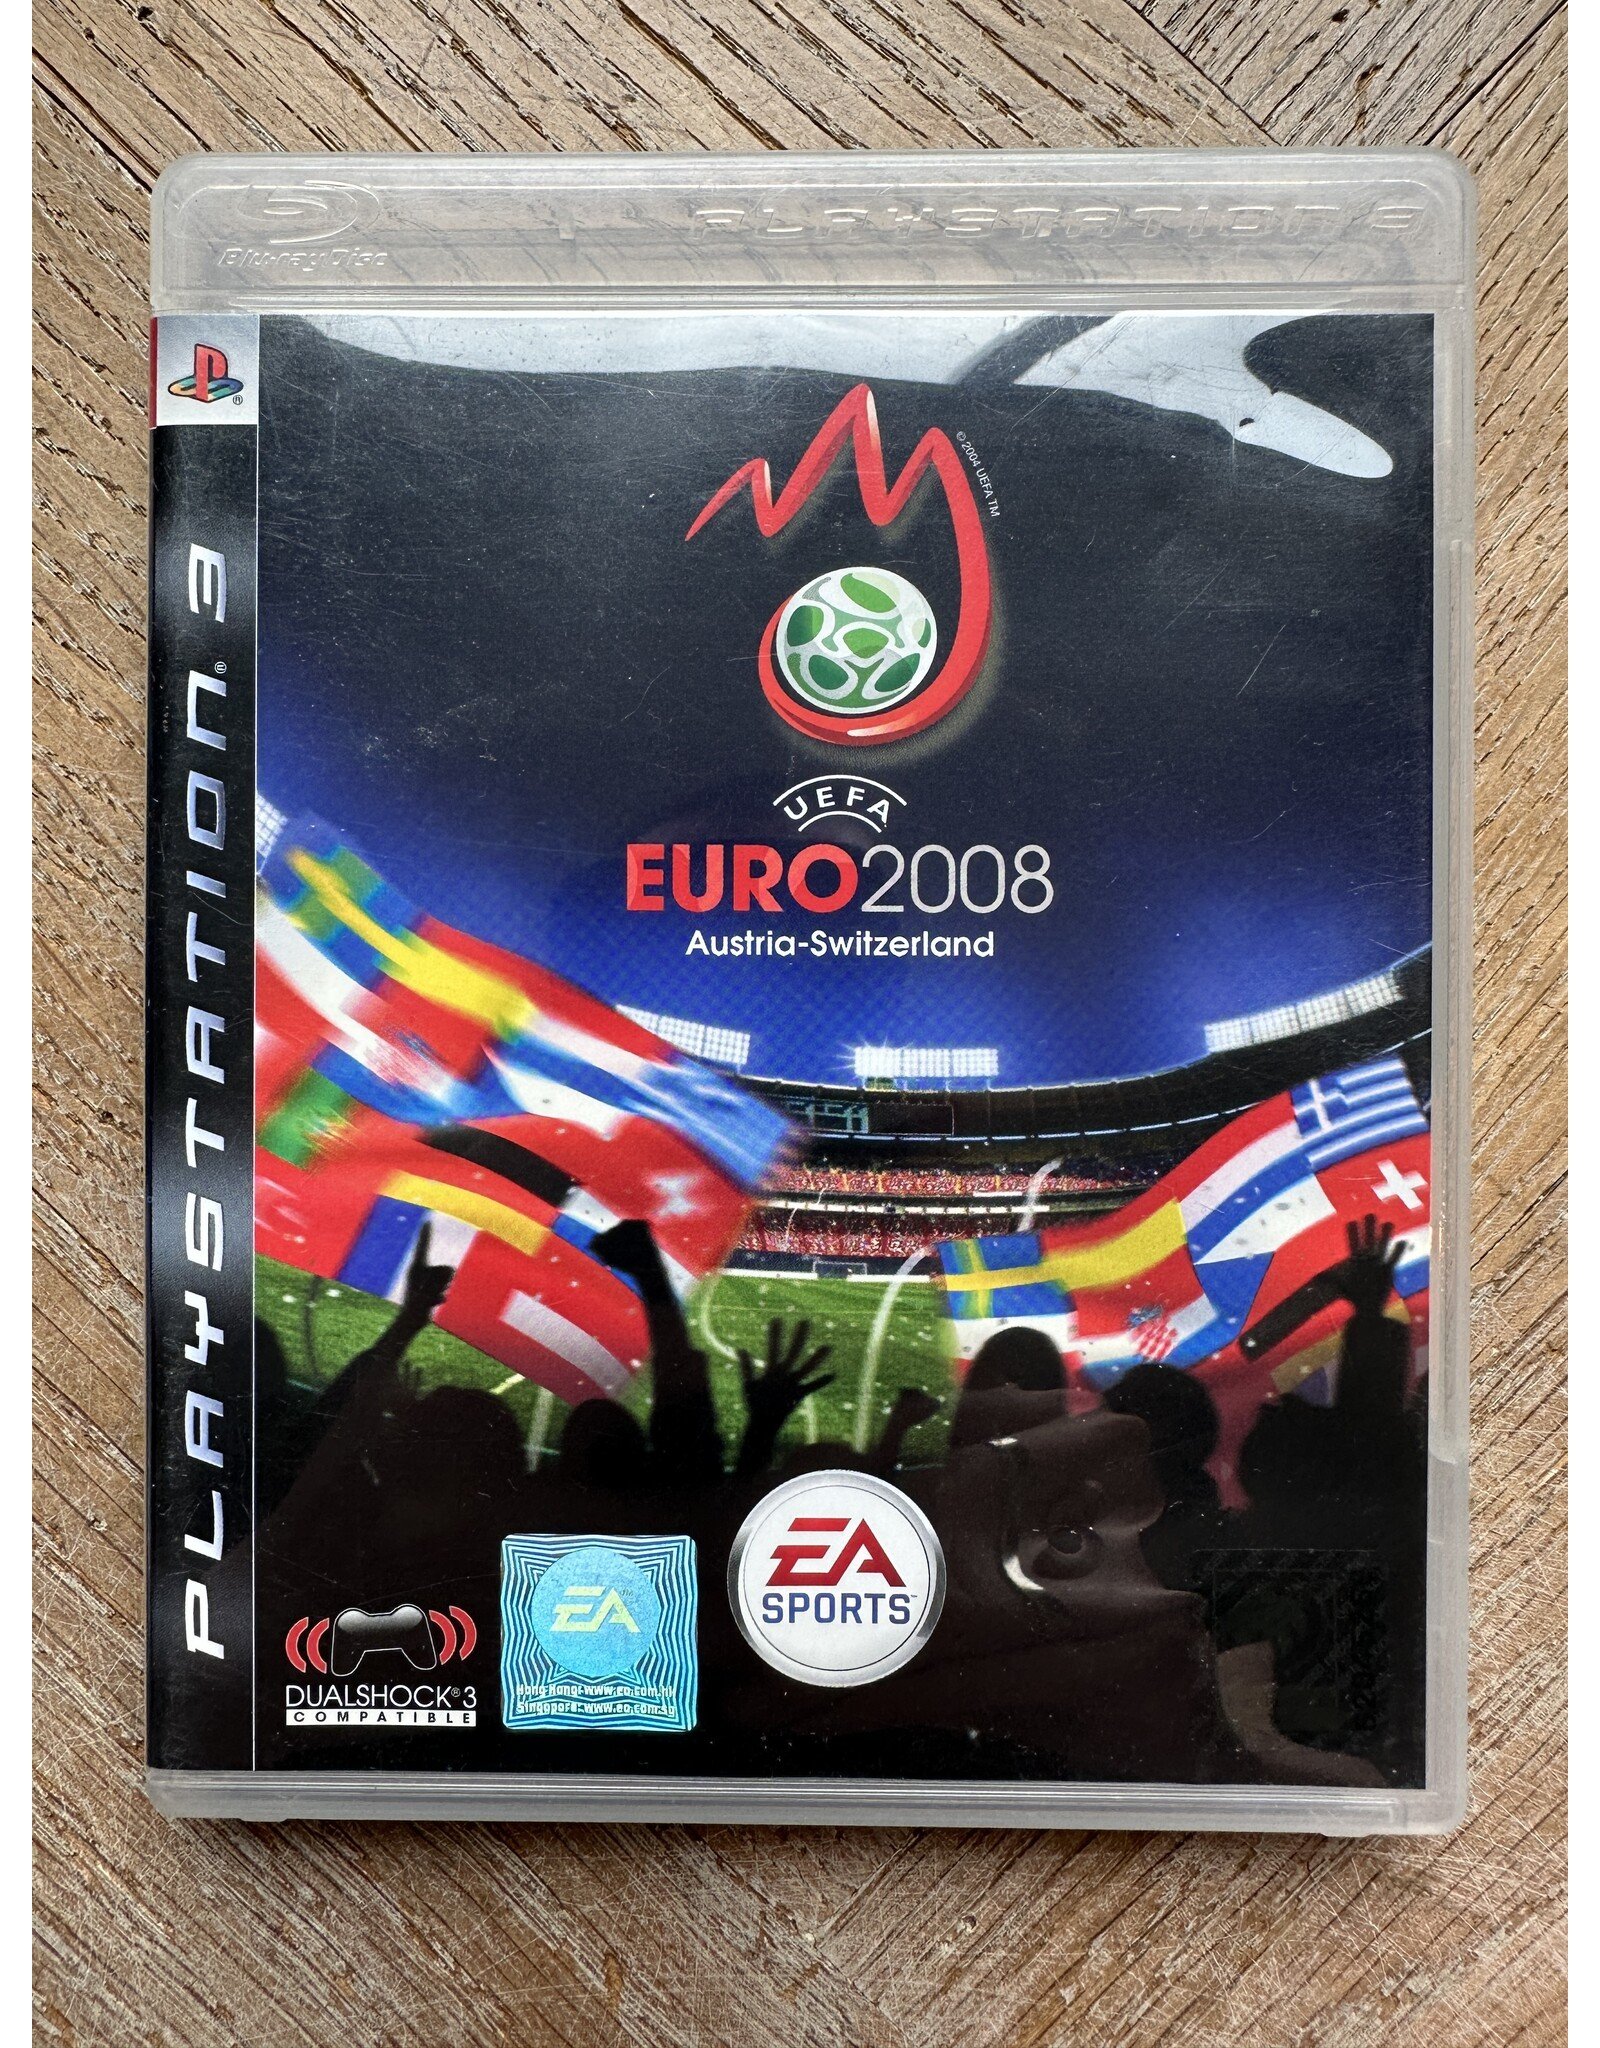 UEFA Euro 2008 Austria-Switzerland Playstation 3